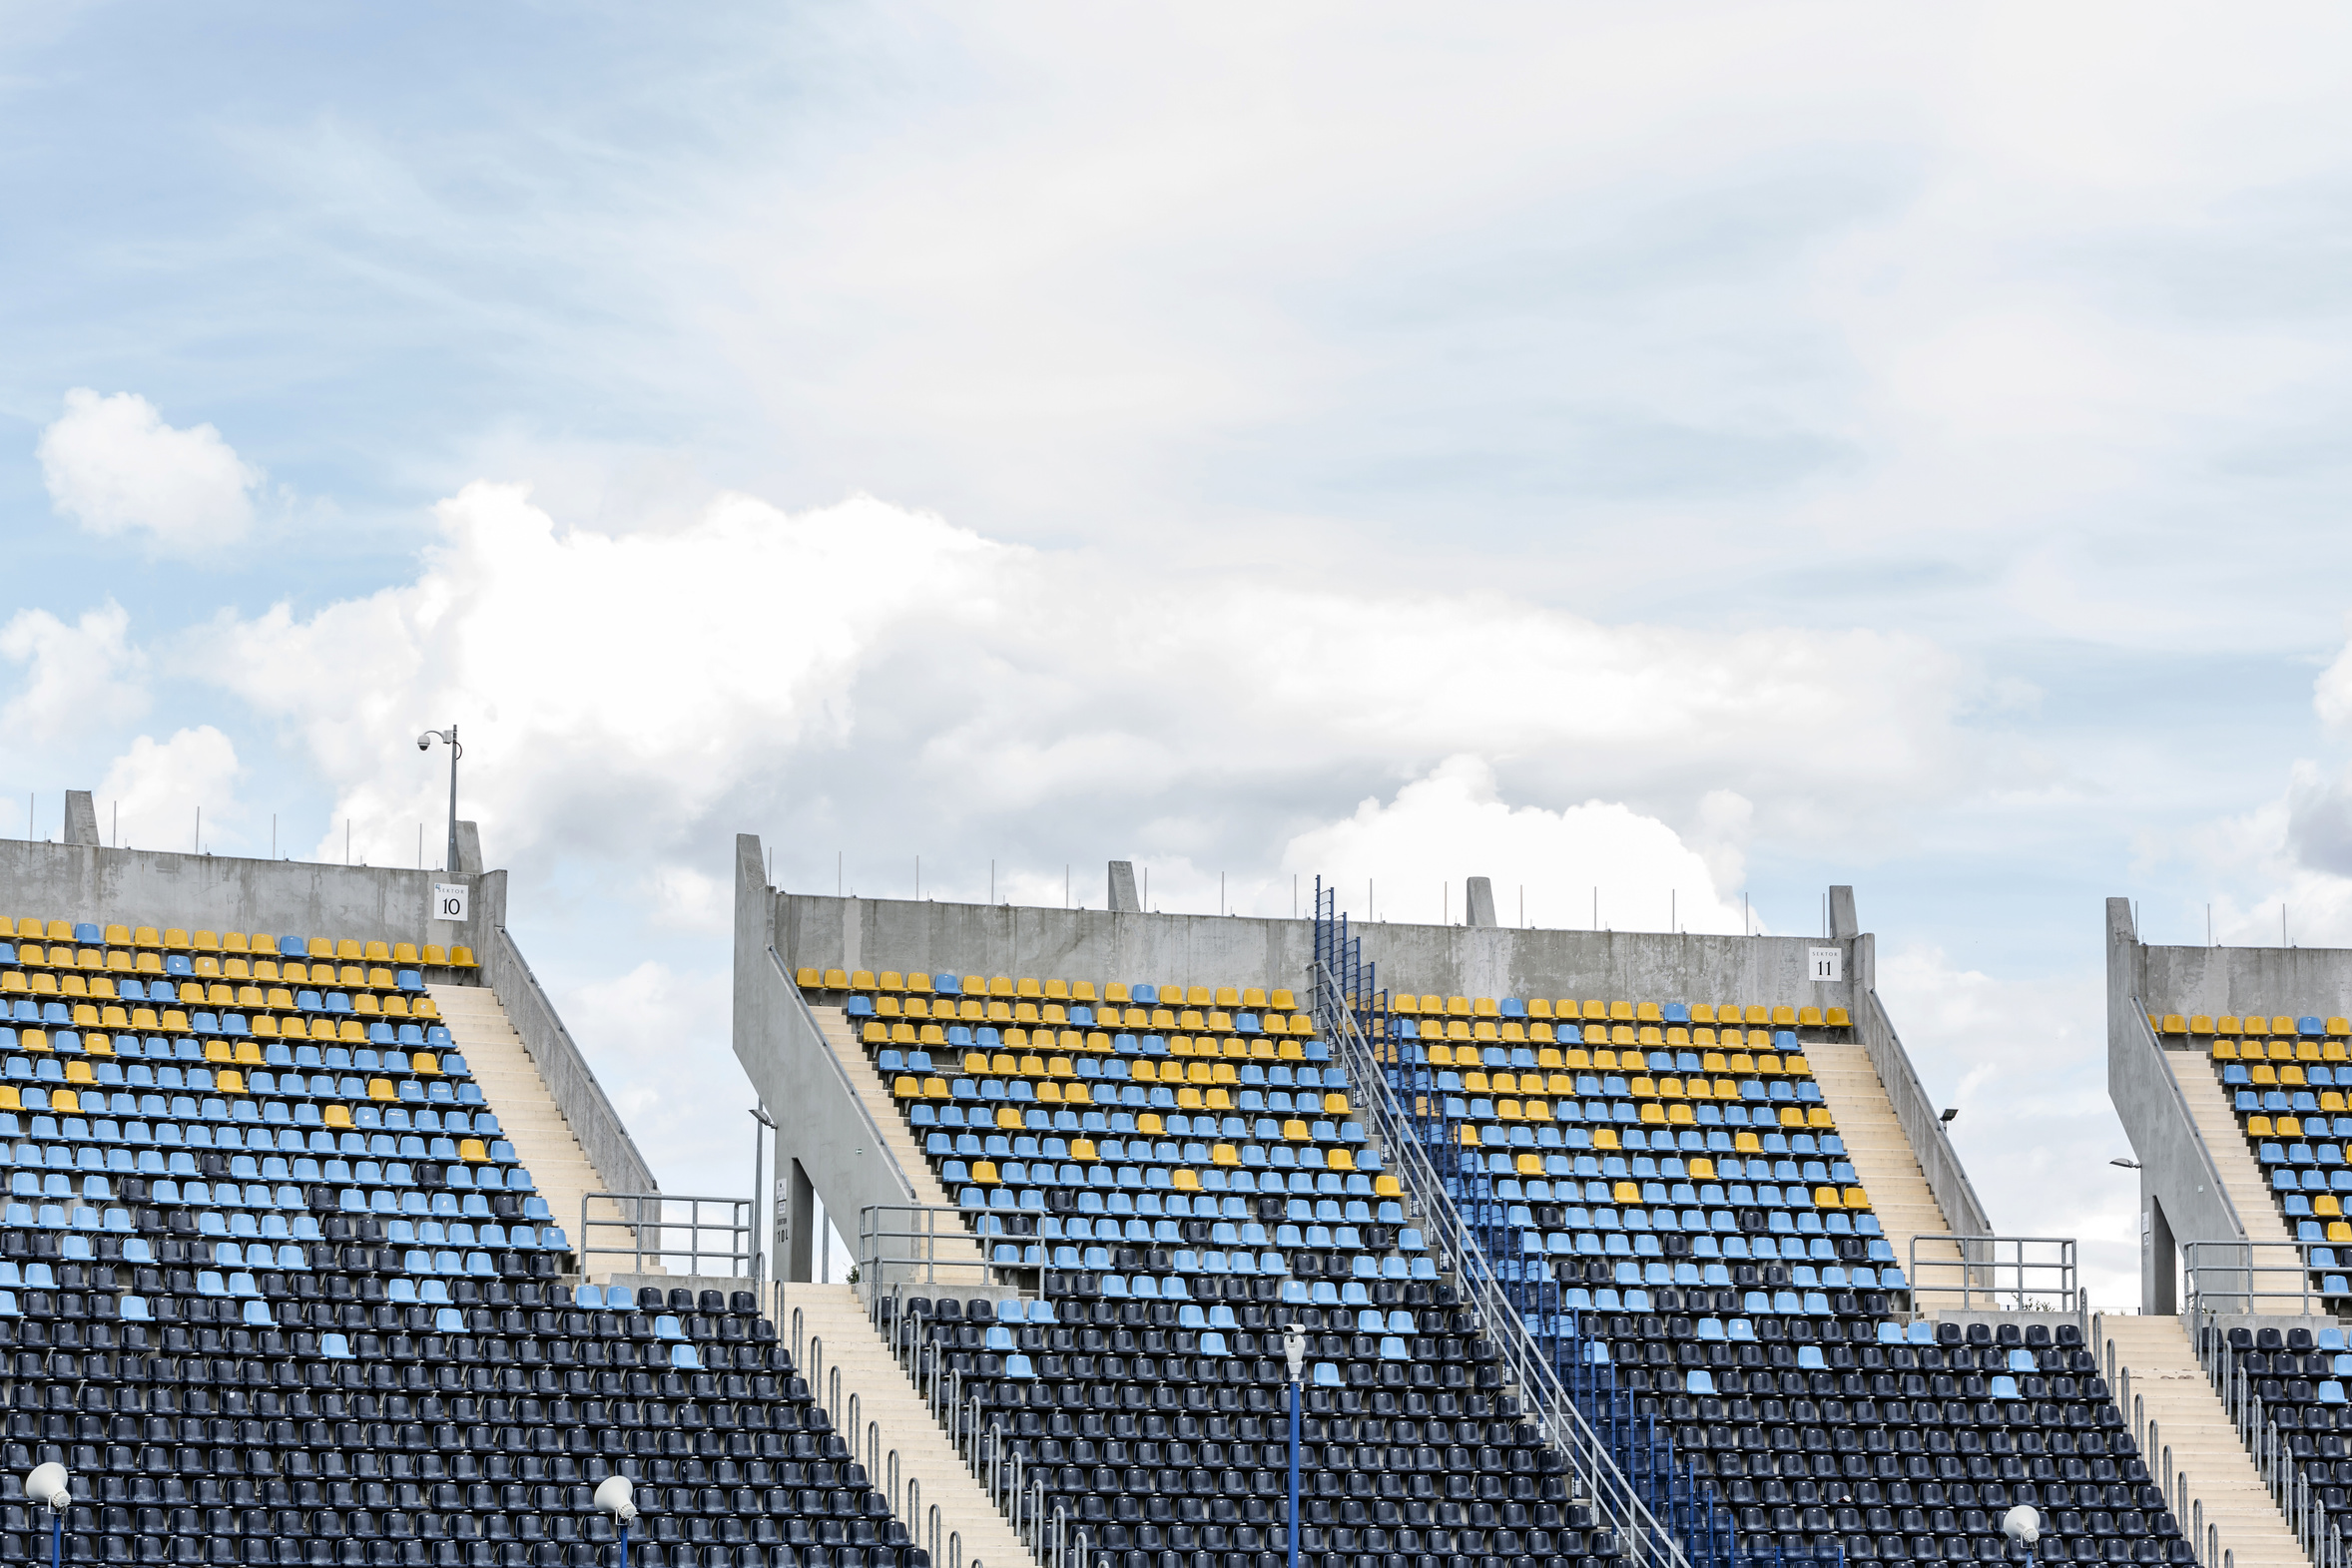 Empty grandstand in stadium